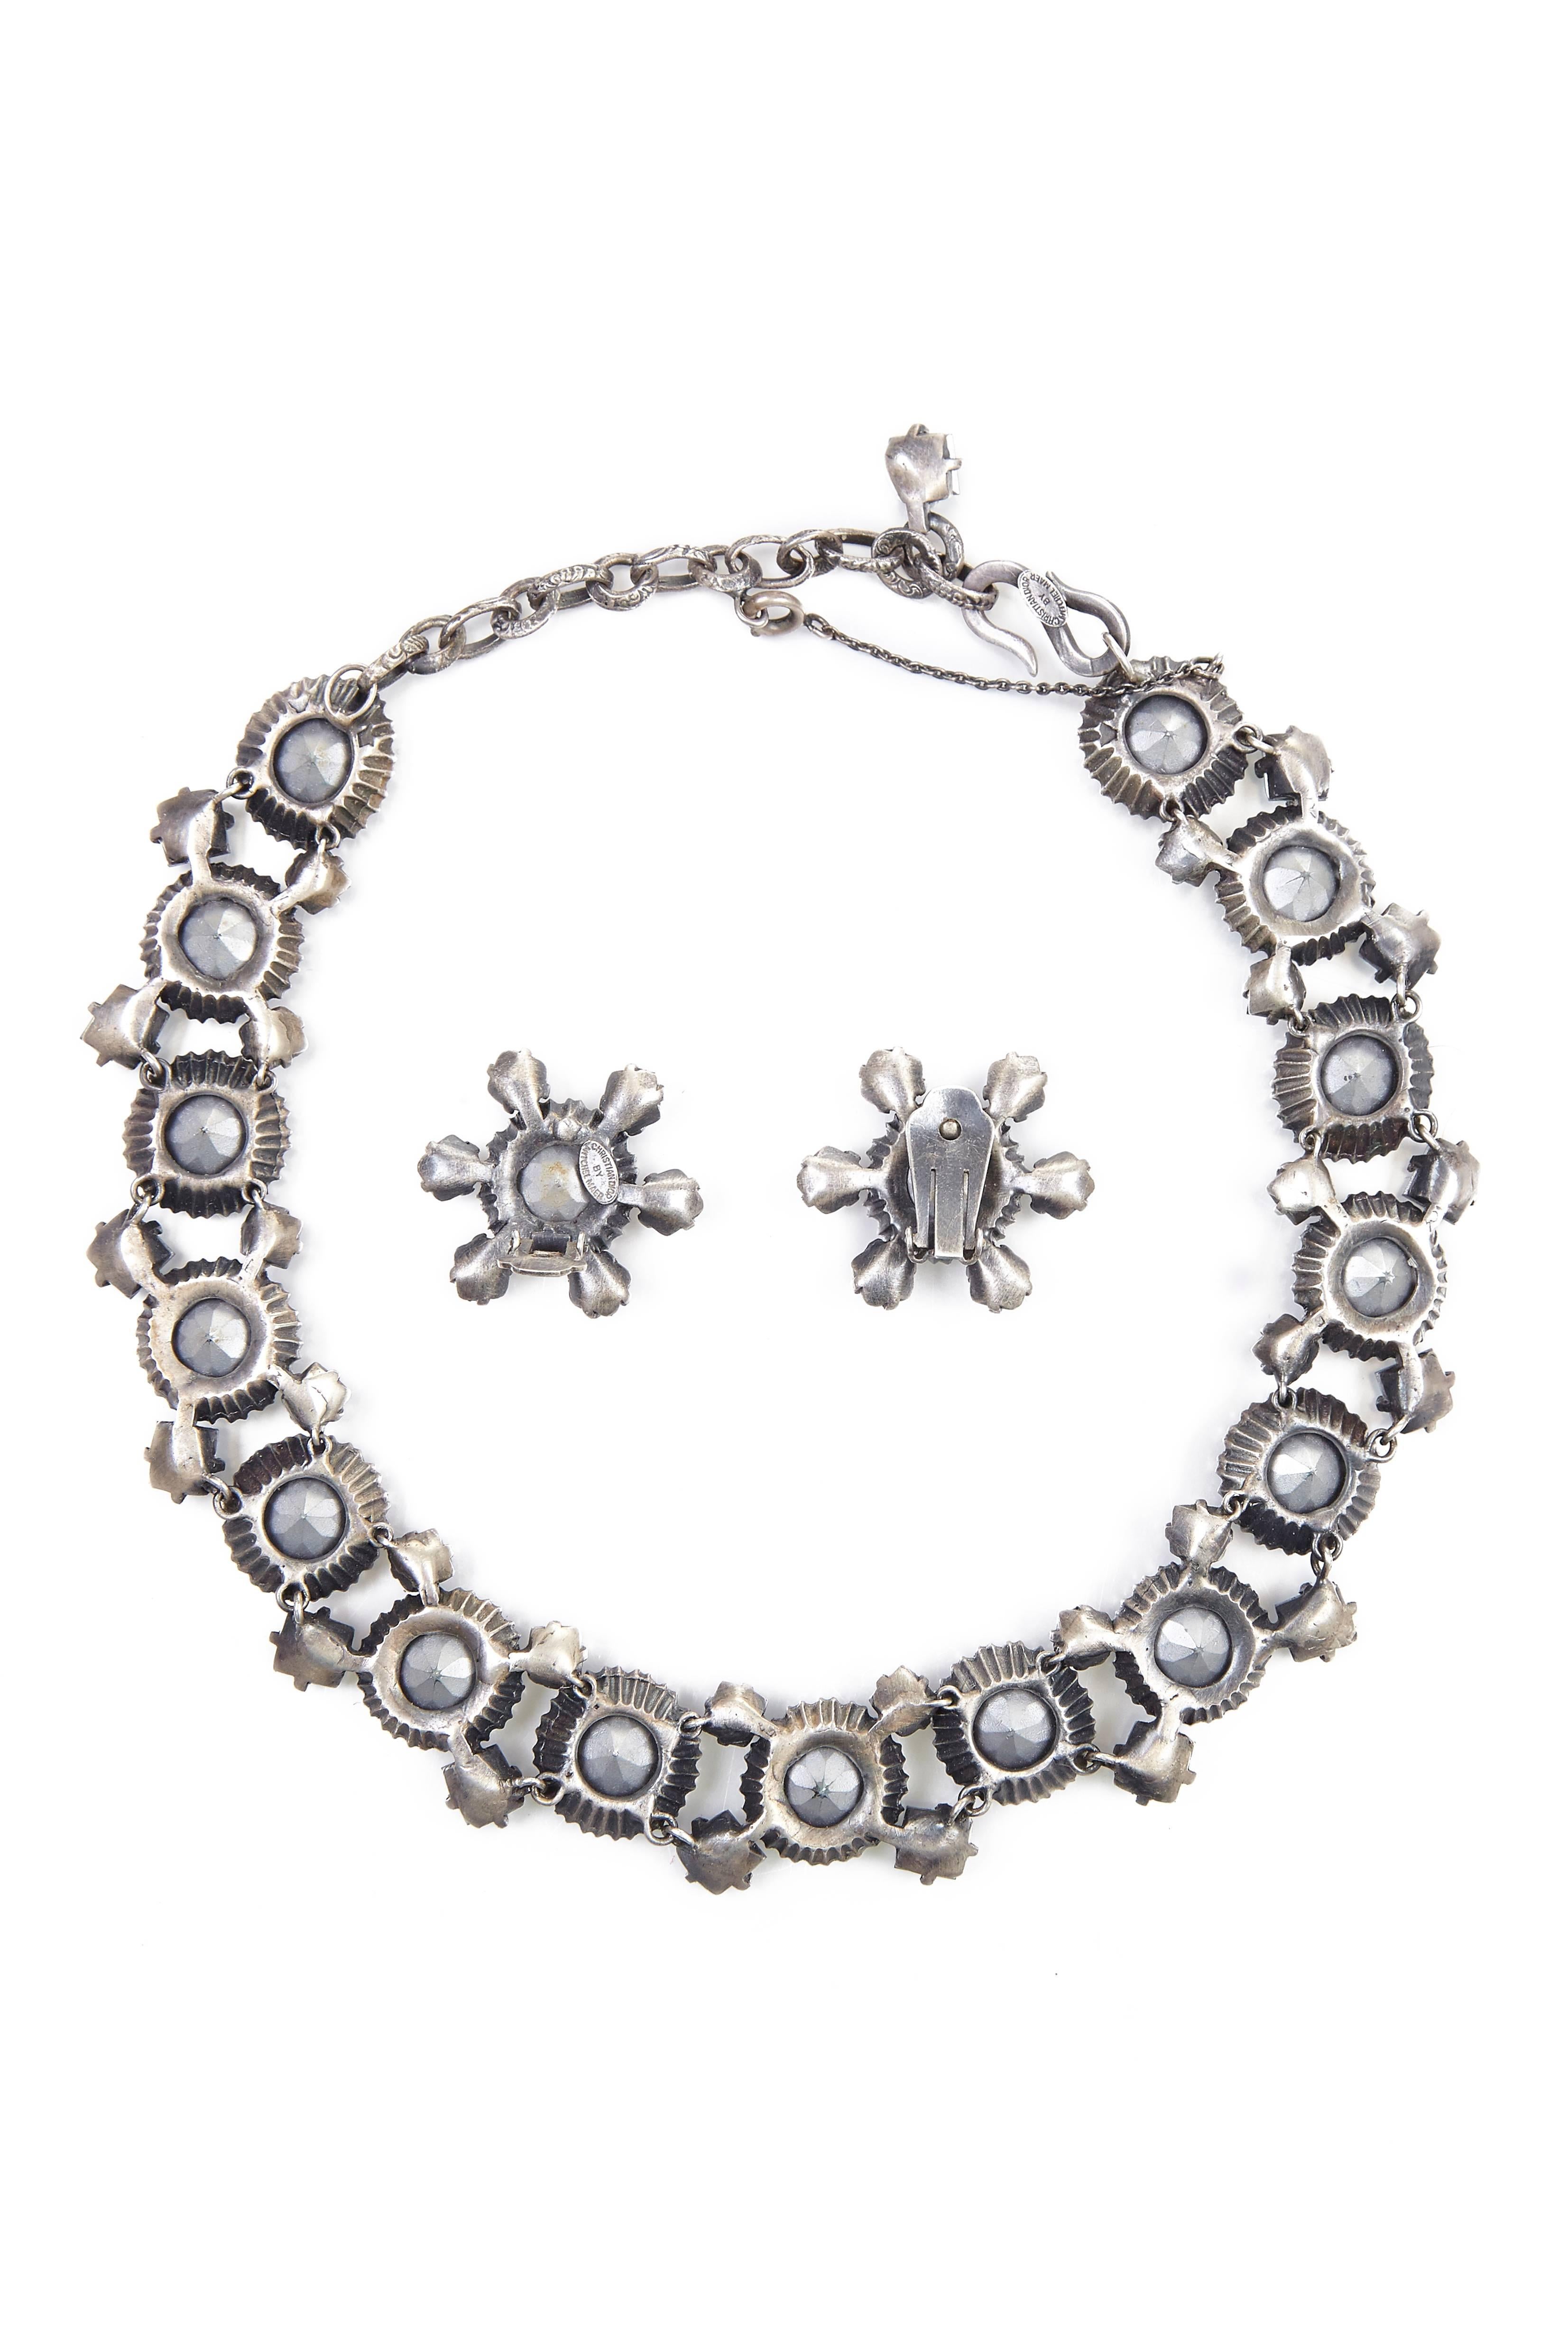 1950s jewelry designers